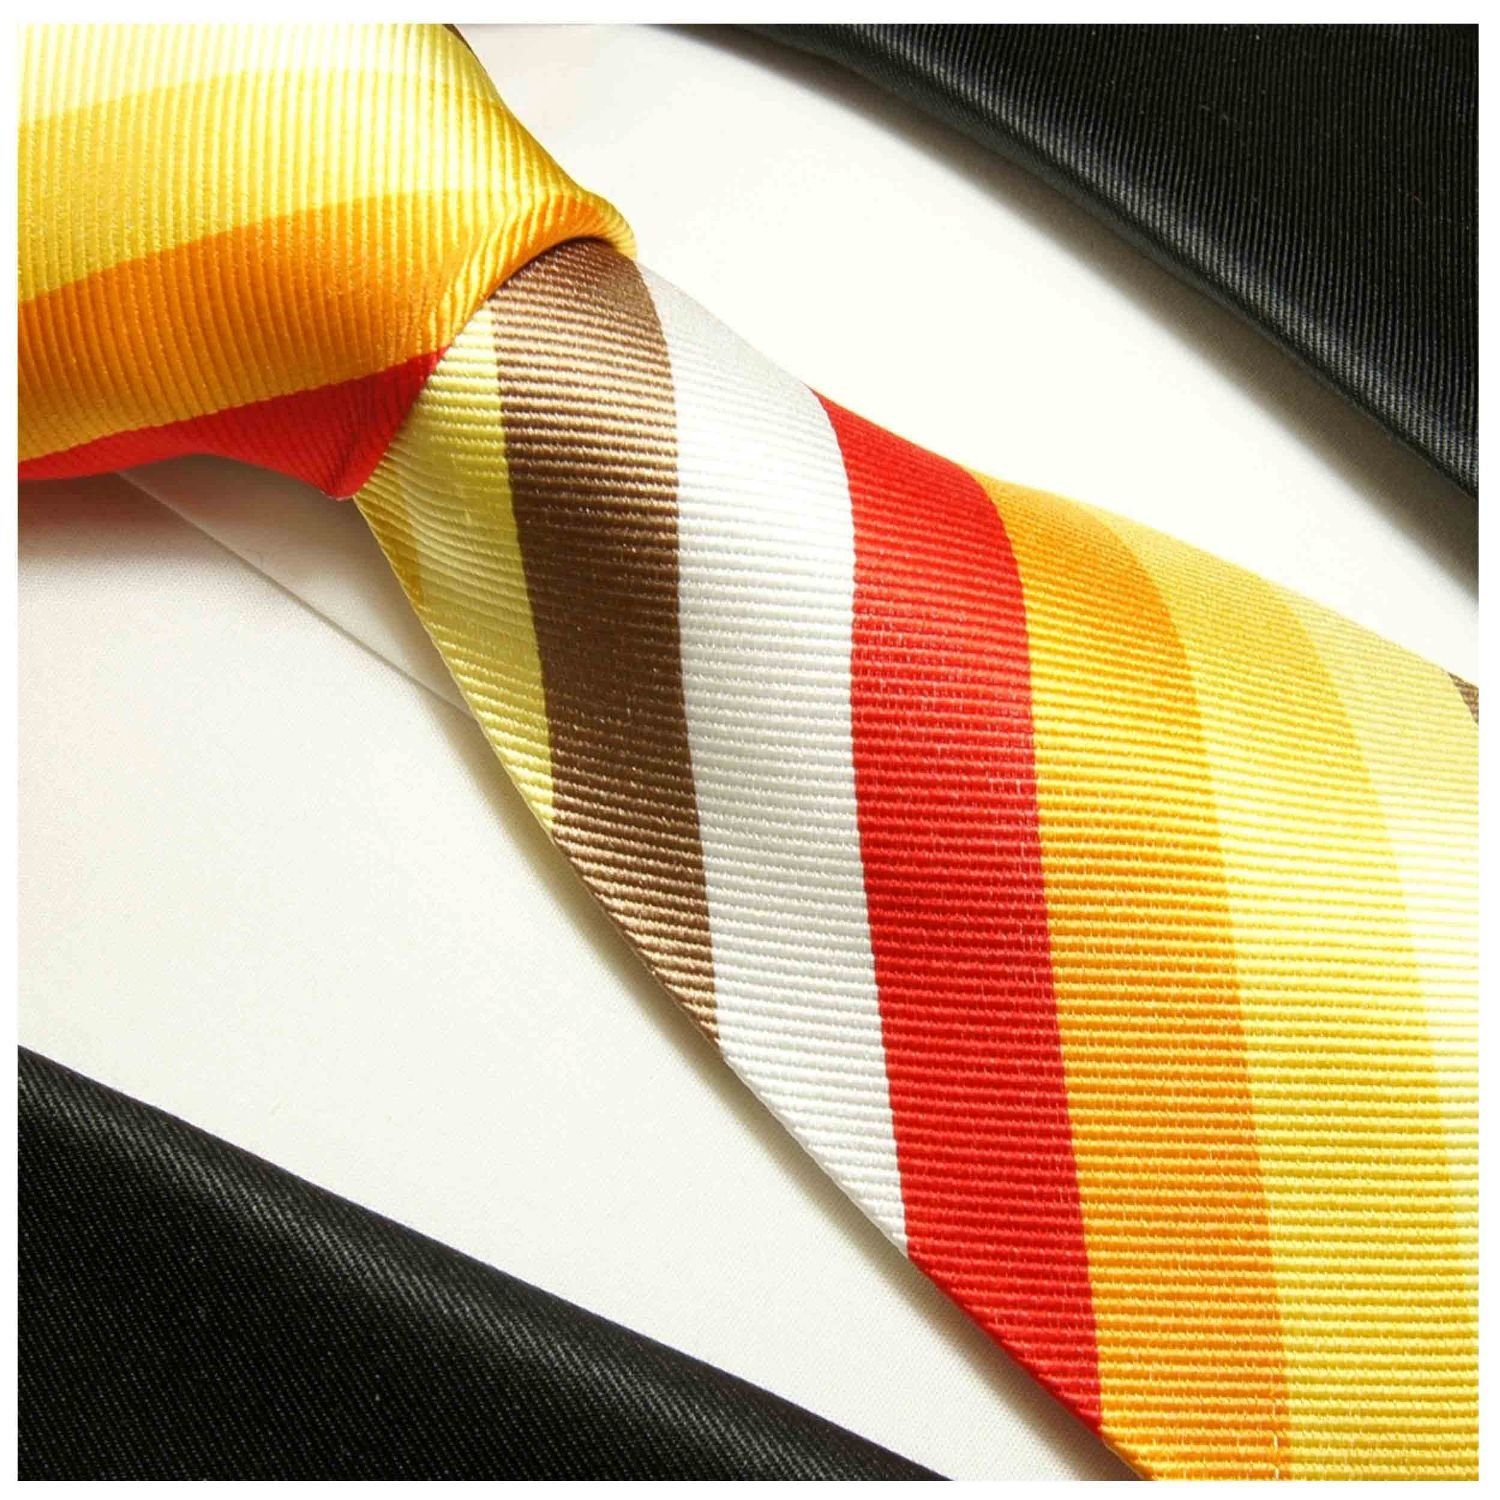 Herren Krawatten Paul Malone Krawatte Designer Seidenkrawatte Herren Schlips modern gestreift 100% Seide Schmal (6cm), rot gold 